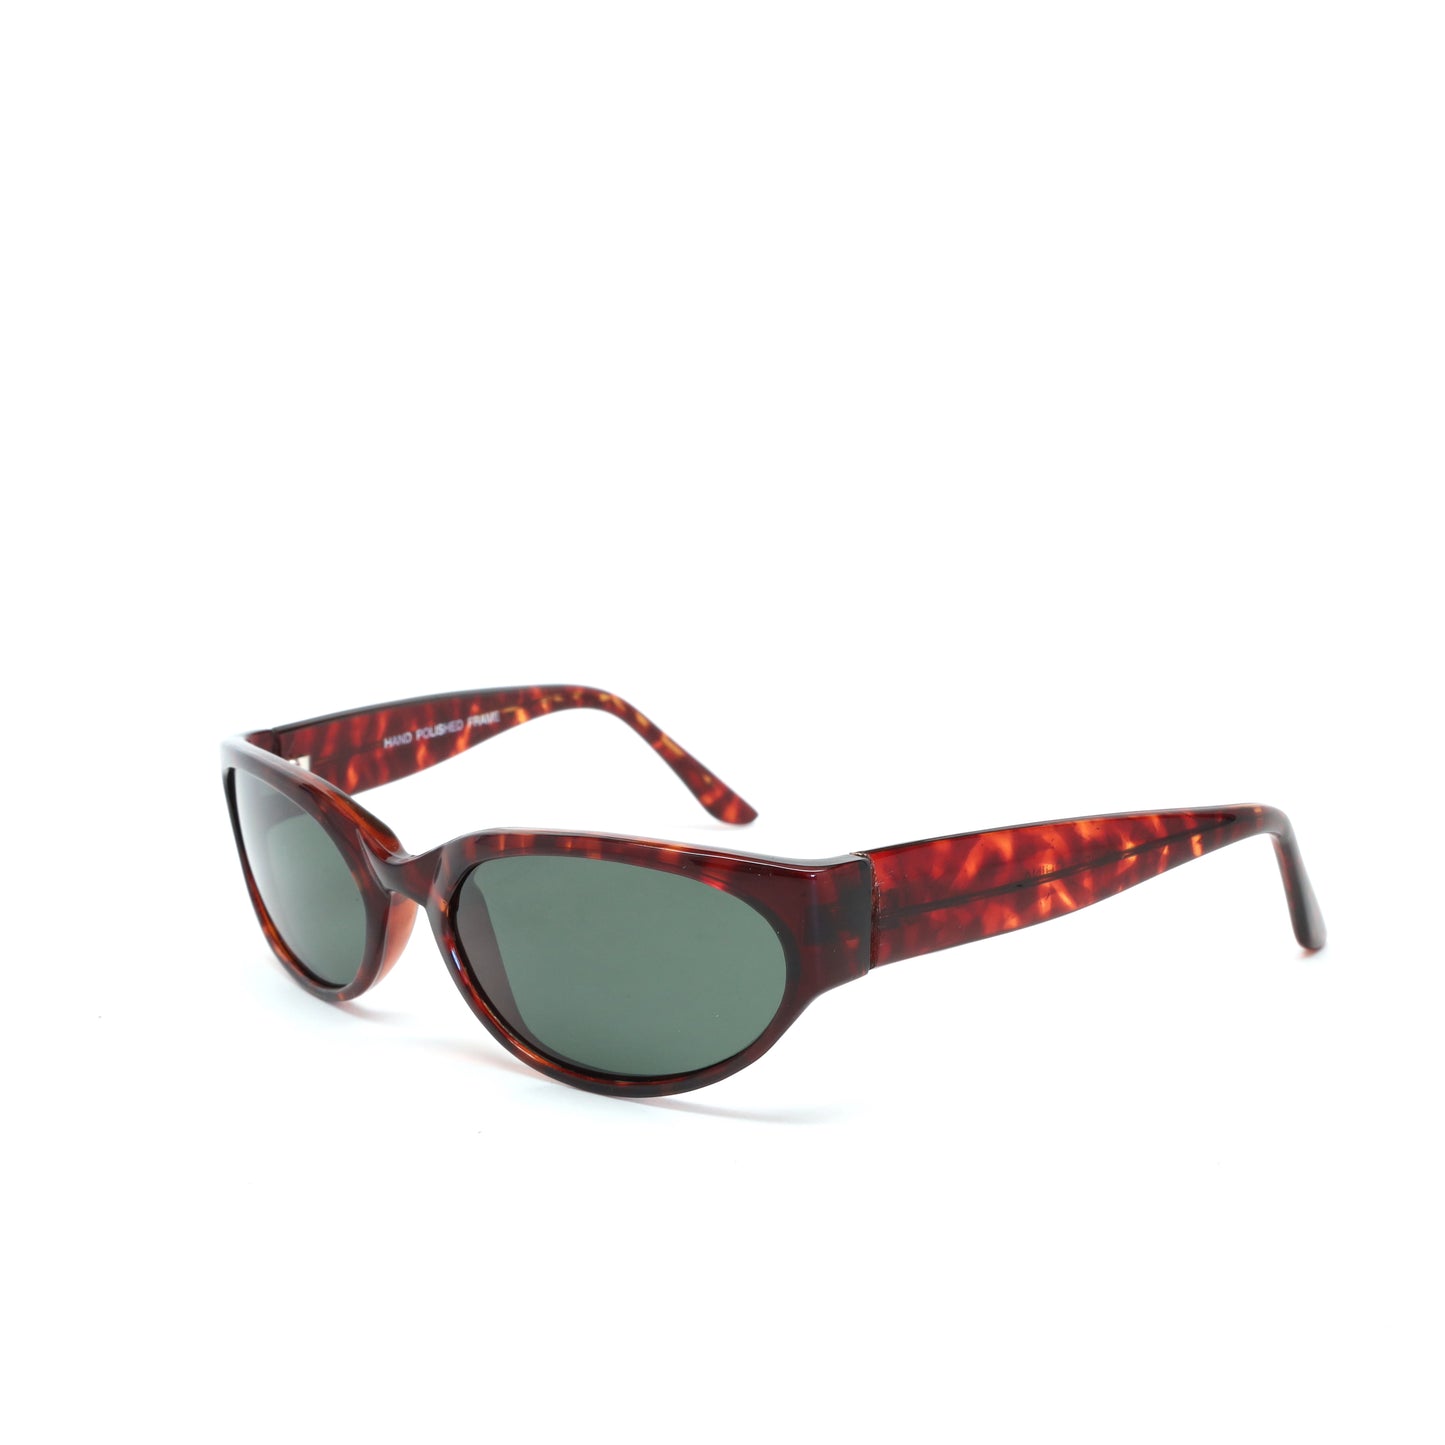 Vintage Standard Size Red Circular Frame Sunglasses - Tortoise